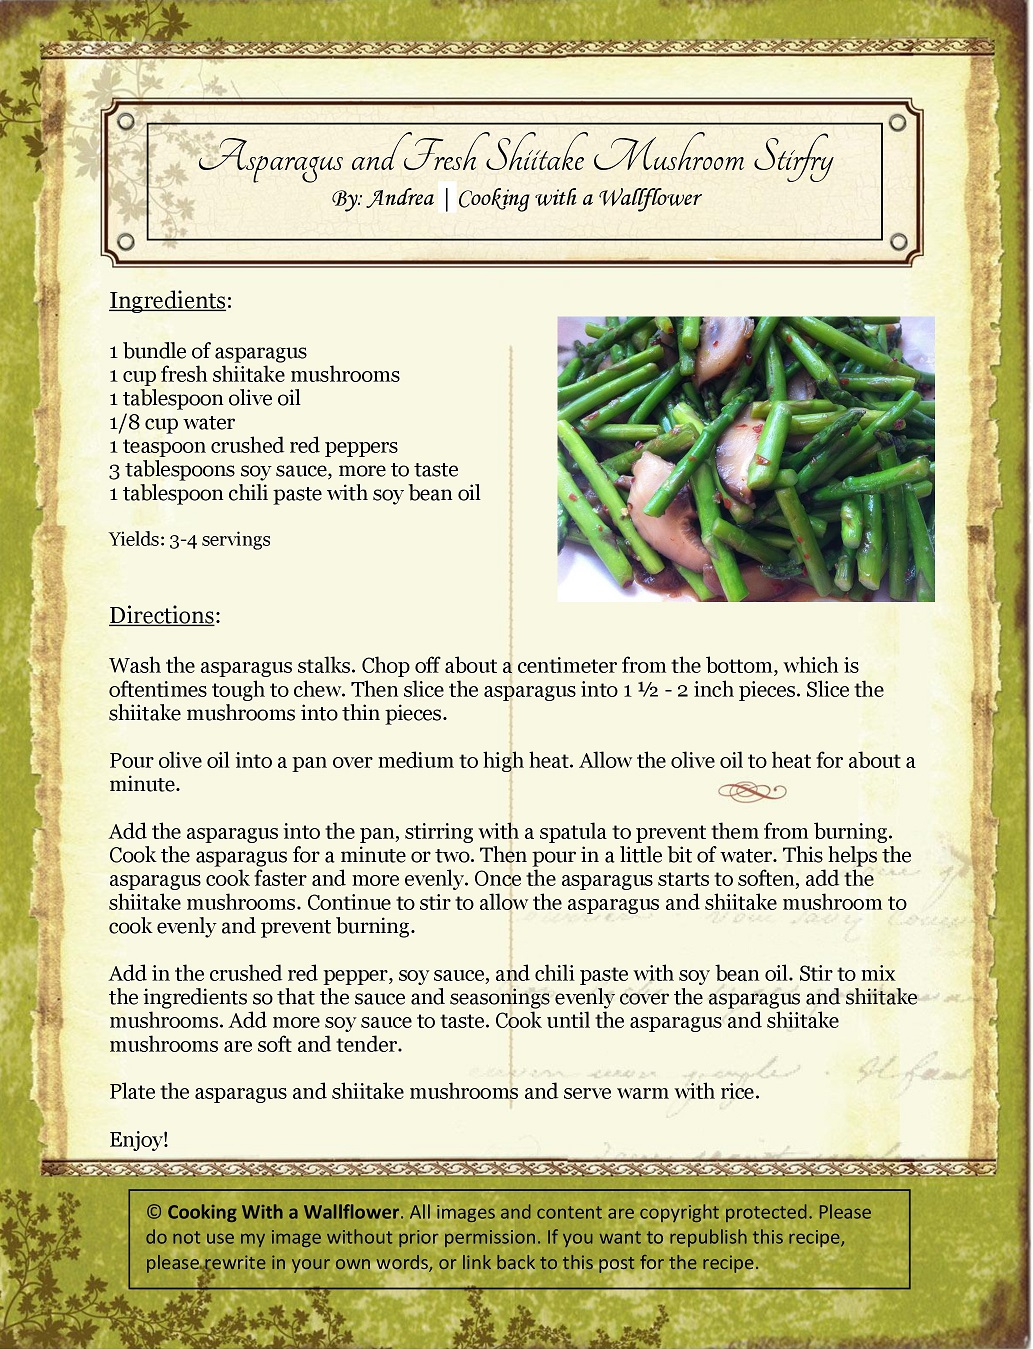 Asparagus and Shiitake Mushroom Stir-fry Recipe Card